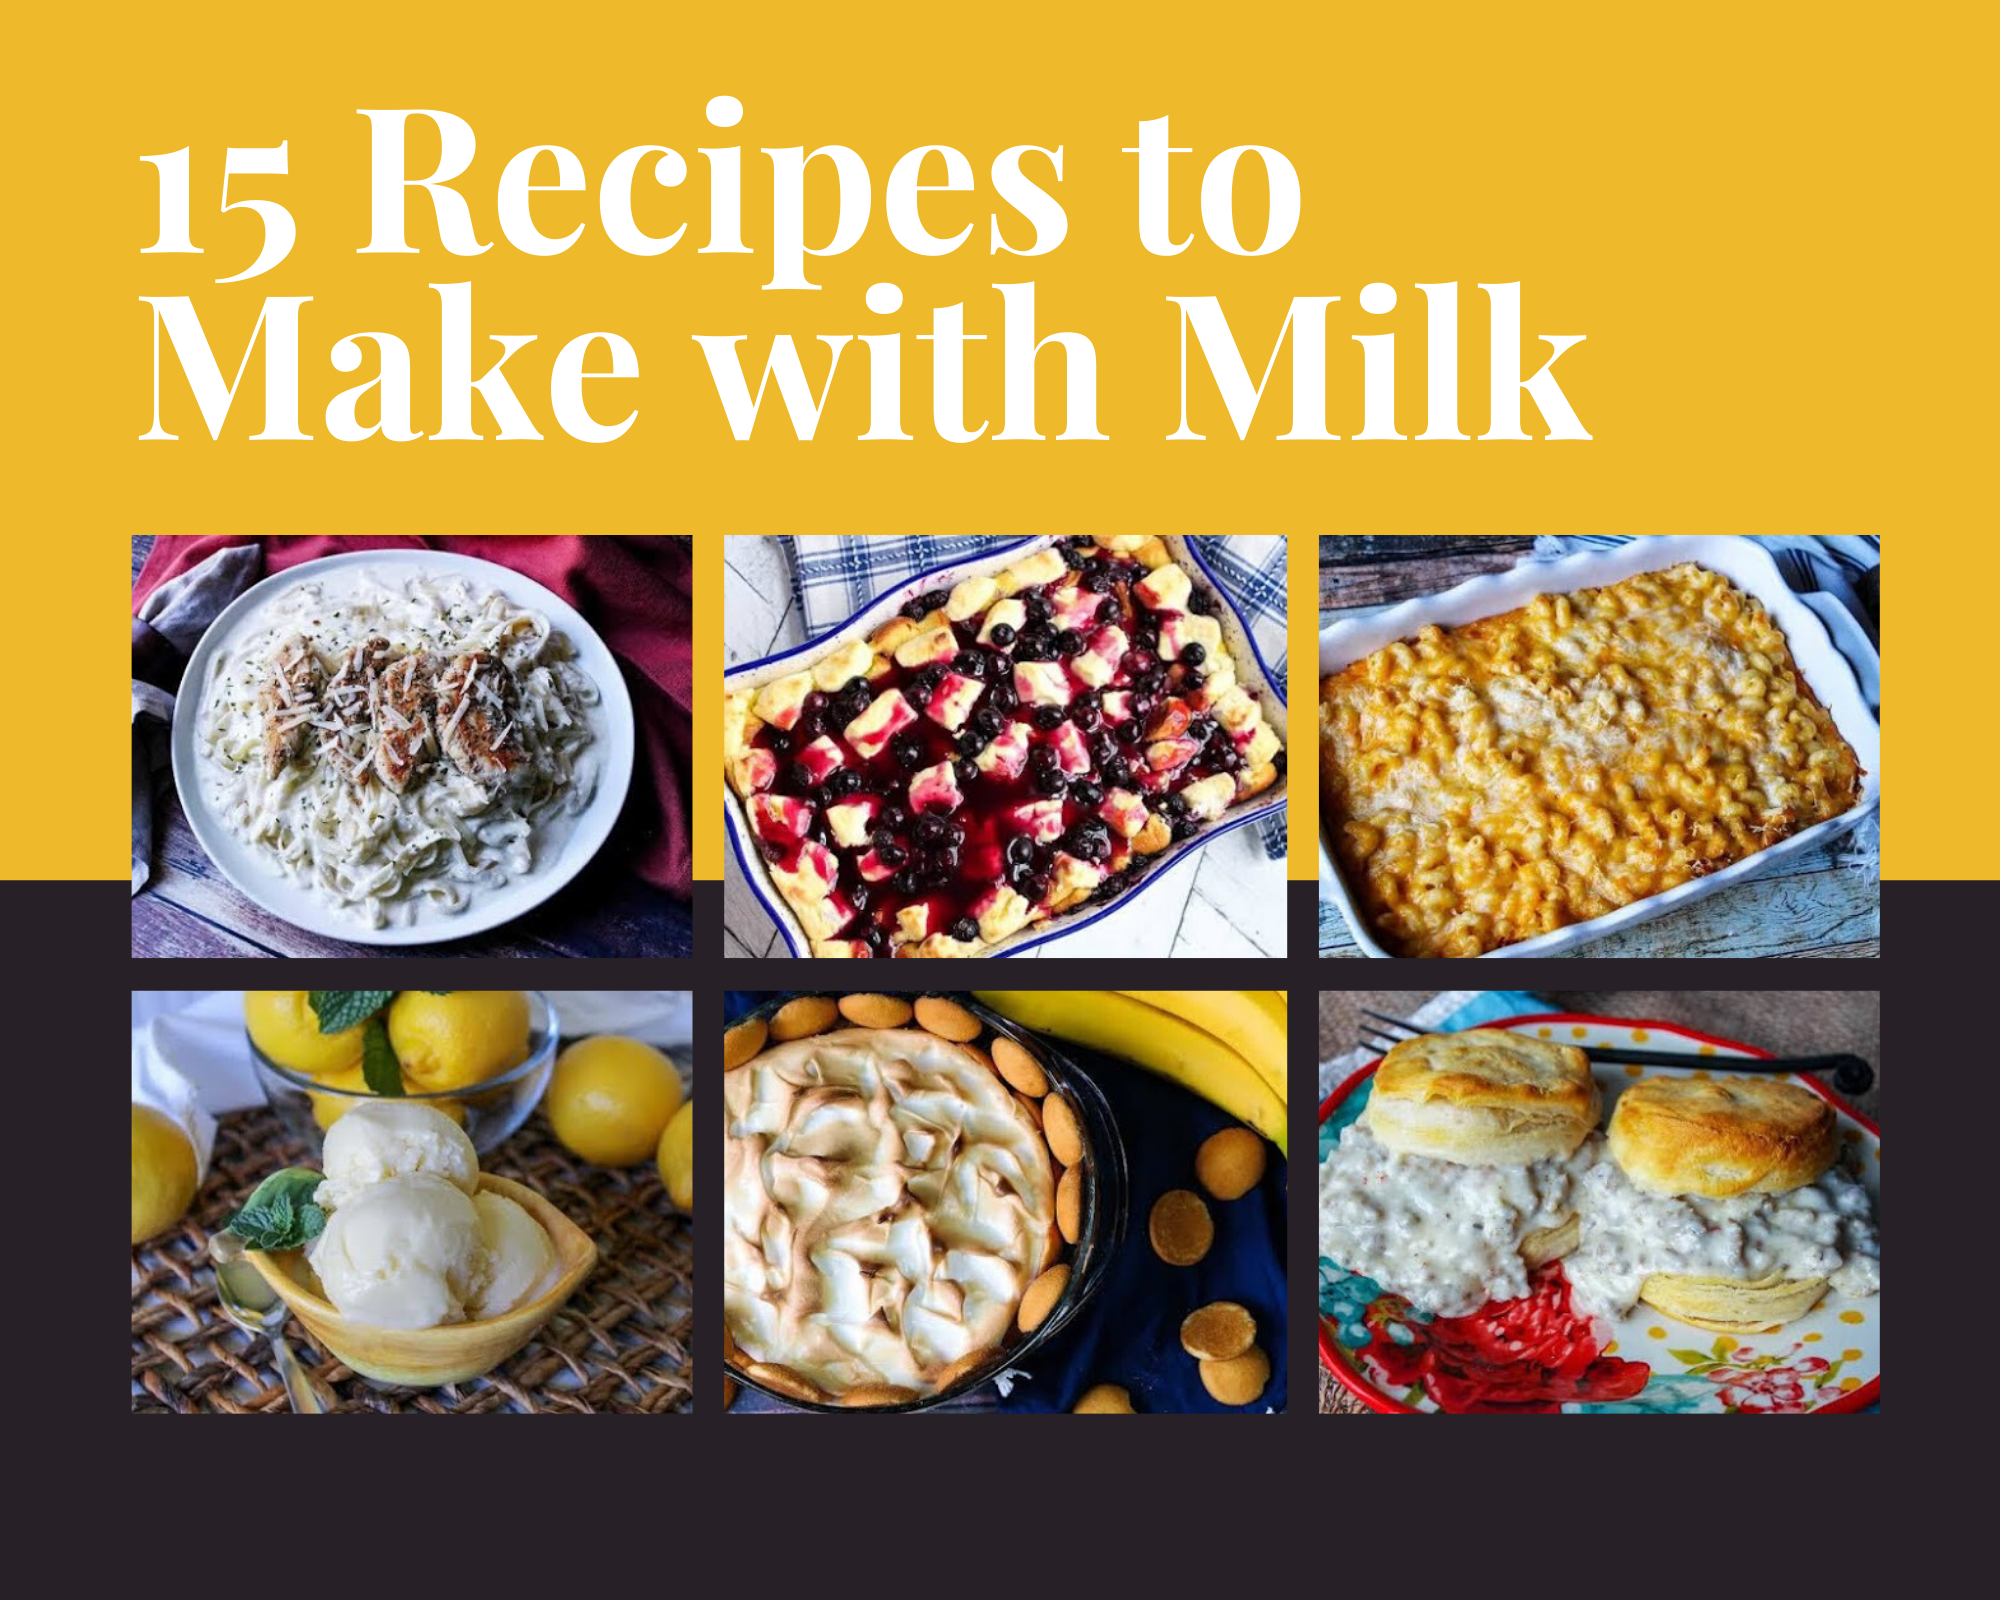 Homemade ice cream, alfredo sauce, macaroni and cheese and more milk-friendly recipes